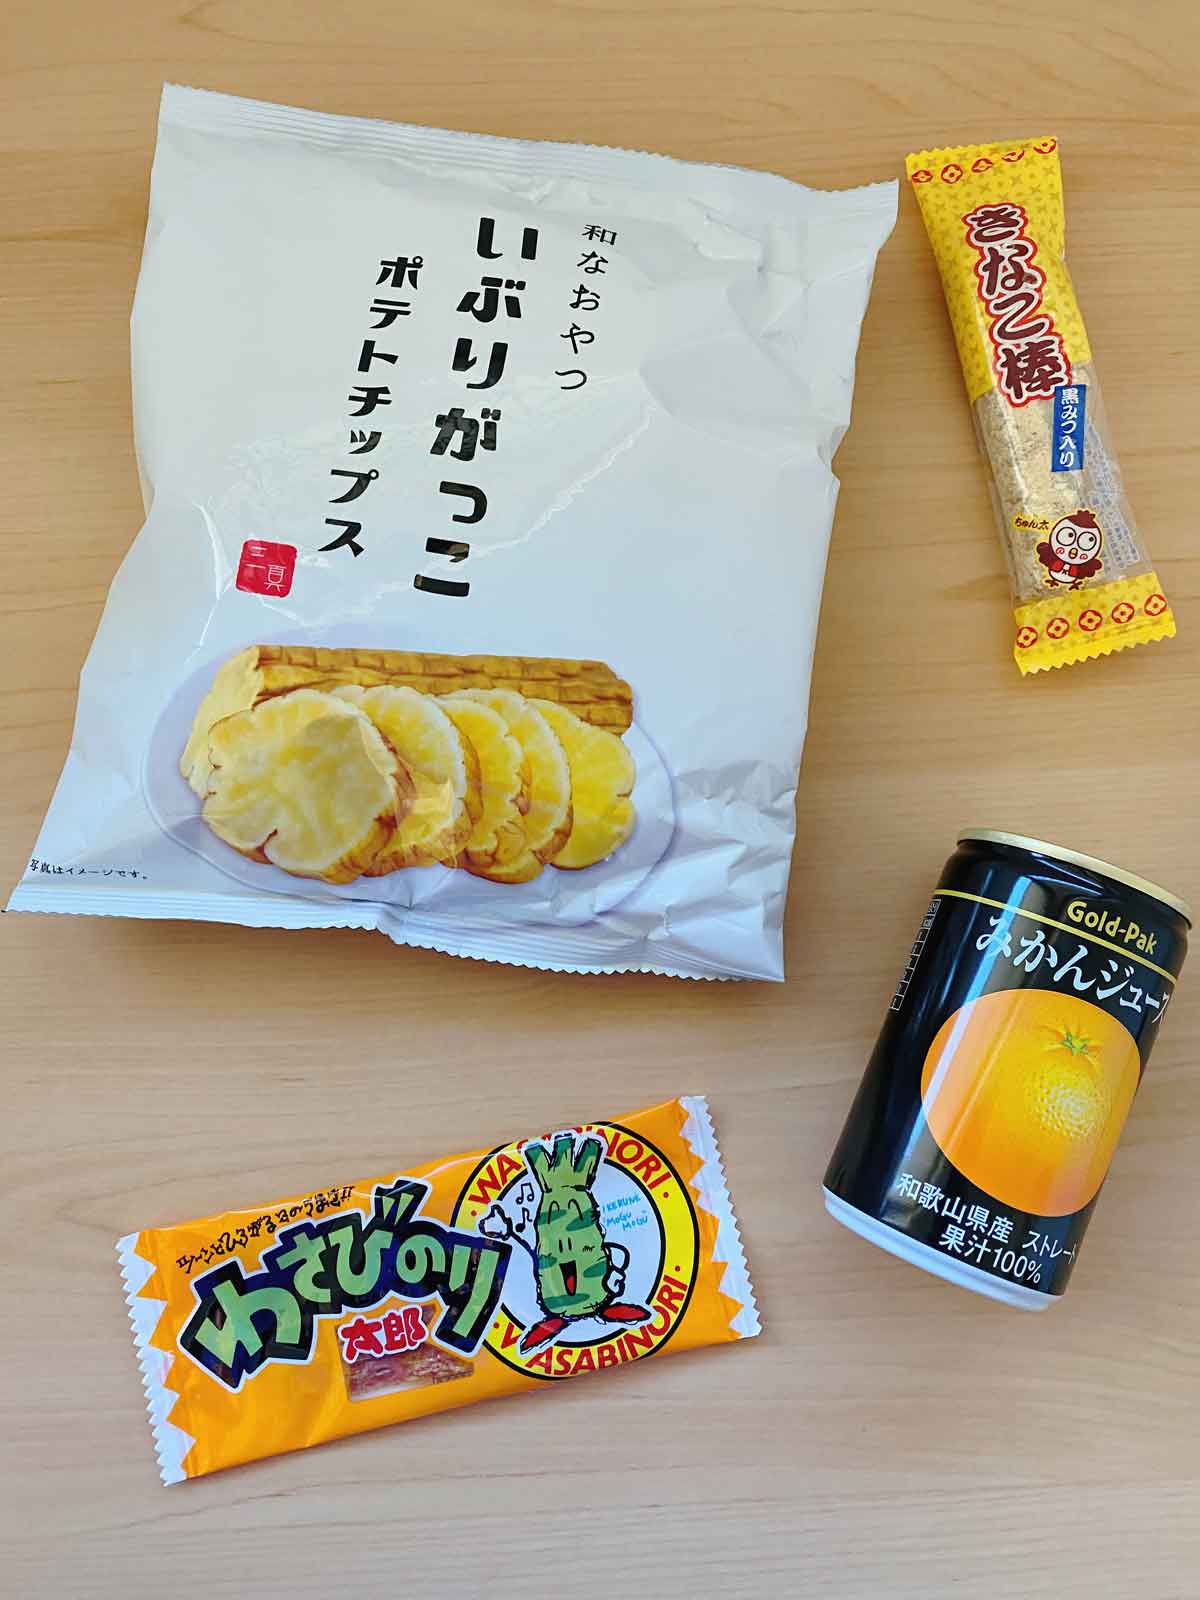 Tokyo Treat Box contents - Pickled Daikon chips, Brown sugar and Kinako Mochi stick, Wasabi fish jerky and Mikan juice